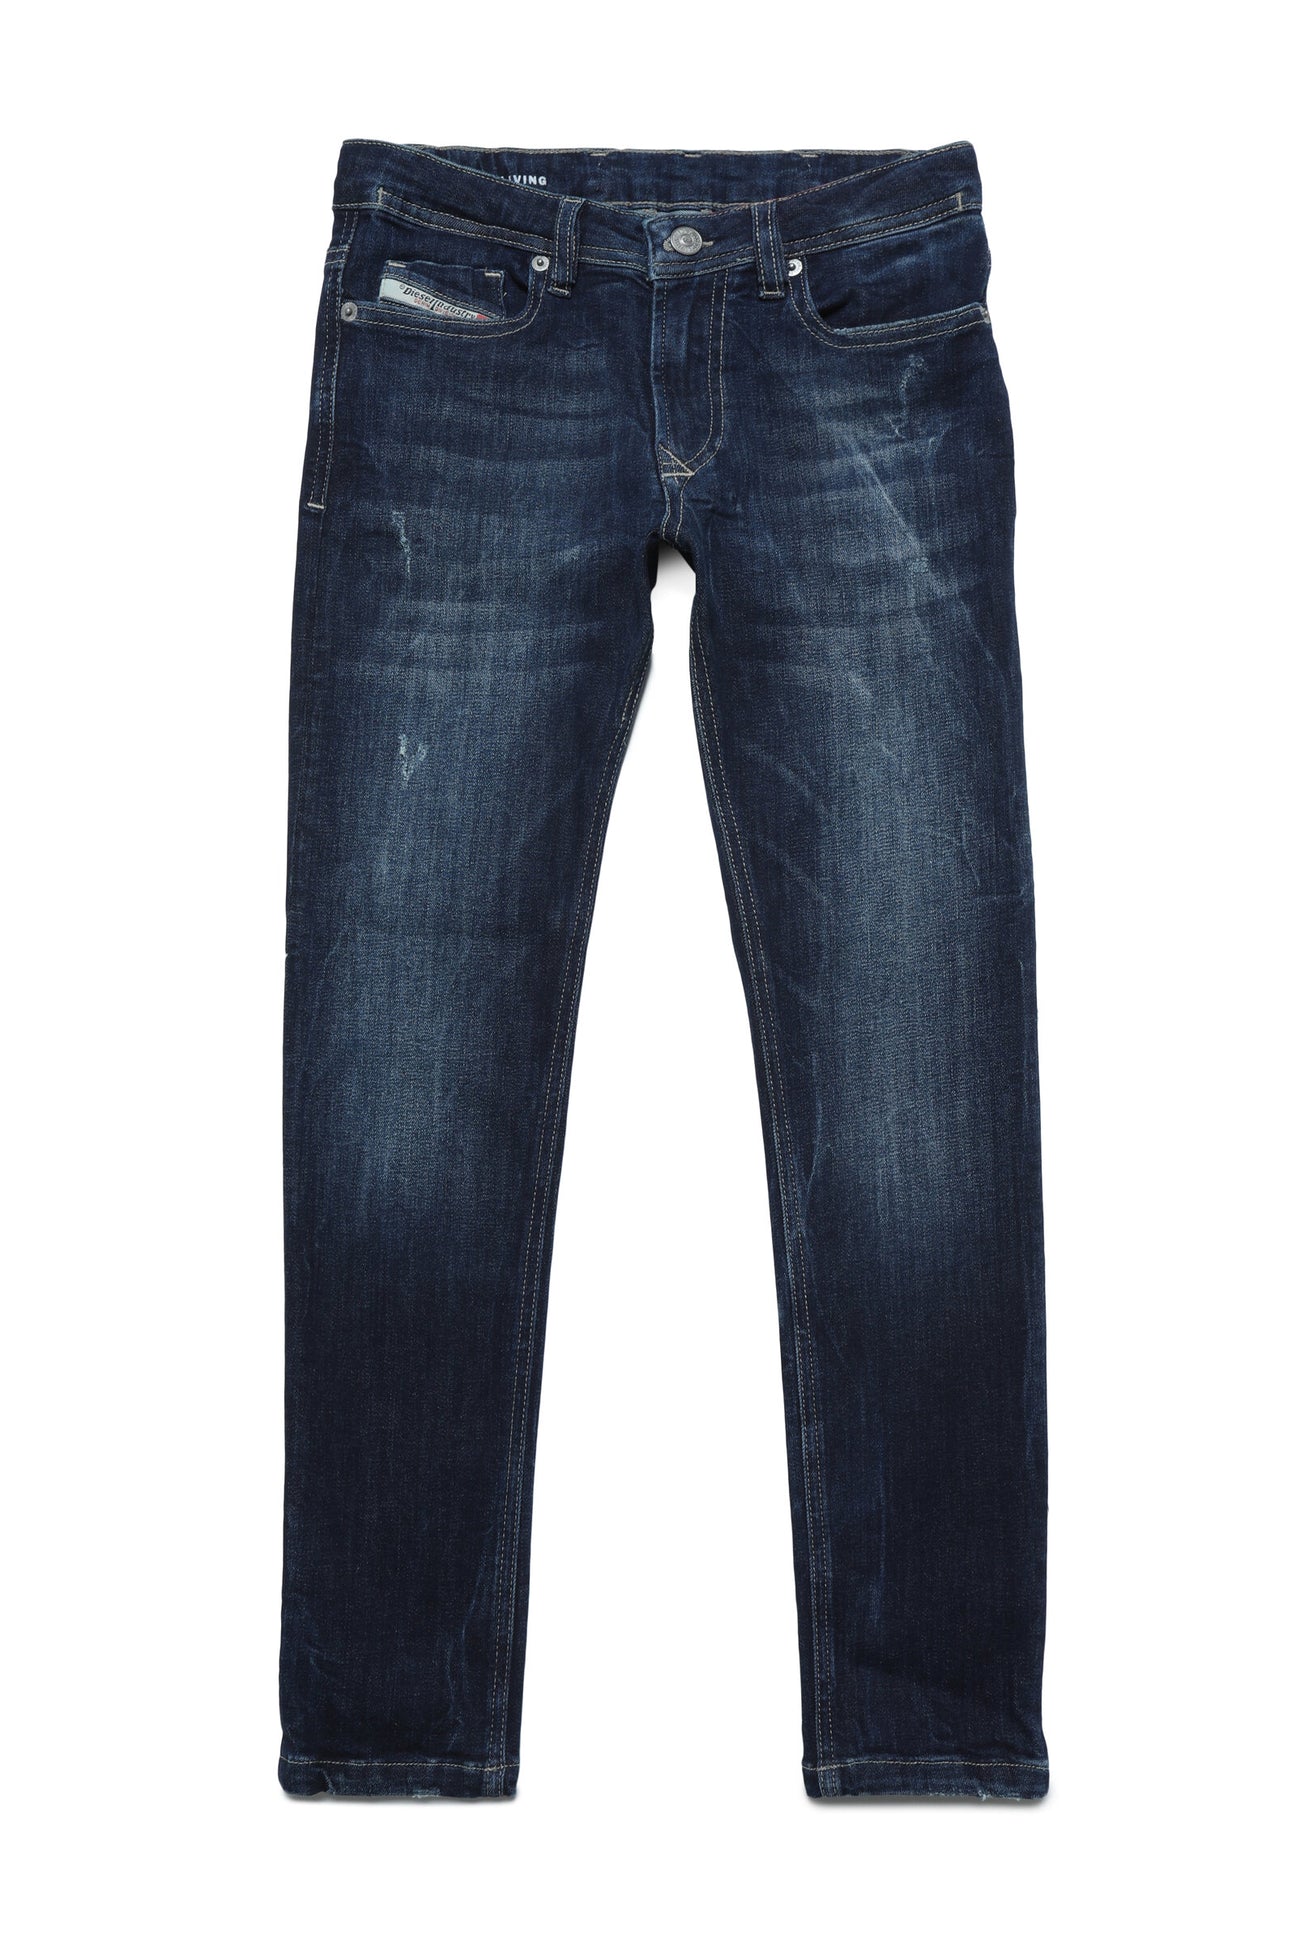 Jeans 1979 Sleenker skinny dark blue faded jeans with abrasions Jeans 1979 Sleenker skinny dark blue faded jeans with abrasions